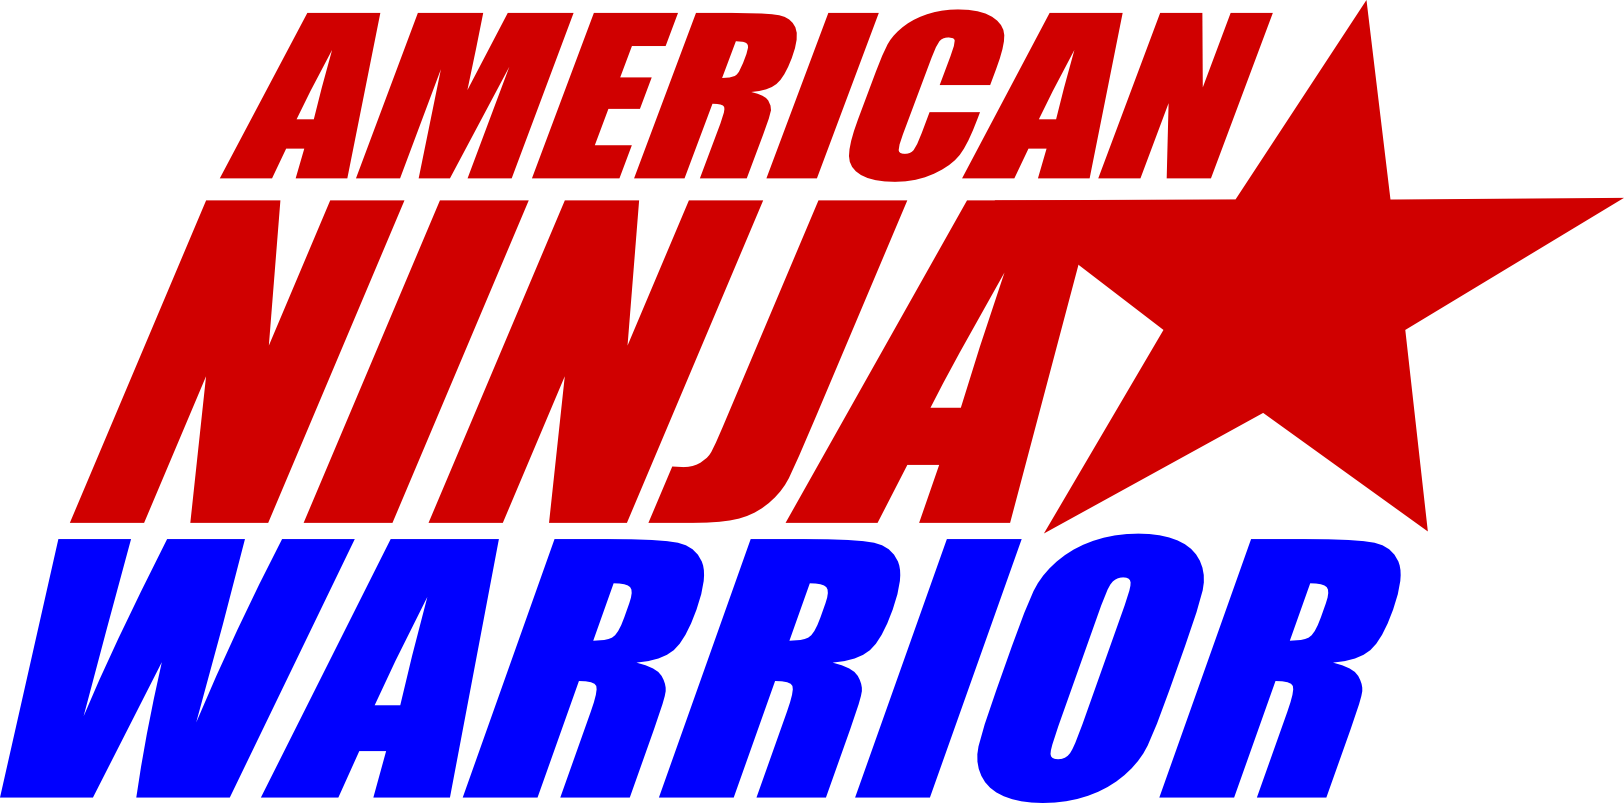 American Ninja Warrior Wallpapers Top Free American Ninja Warrior Backgrounds Wallpaperaccess - american ninja warrior game roblox